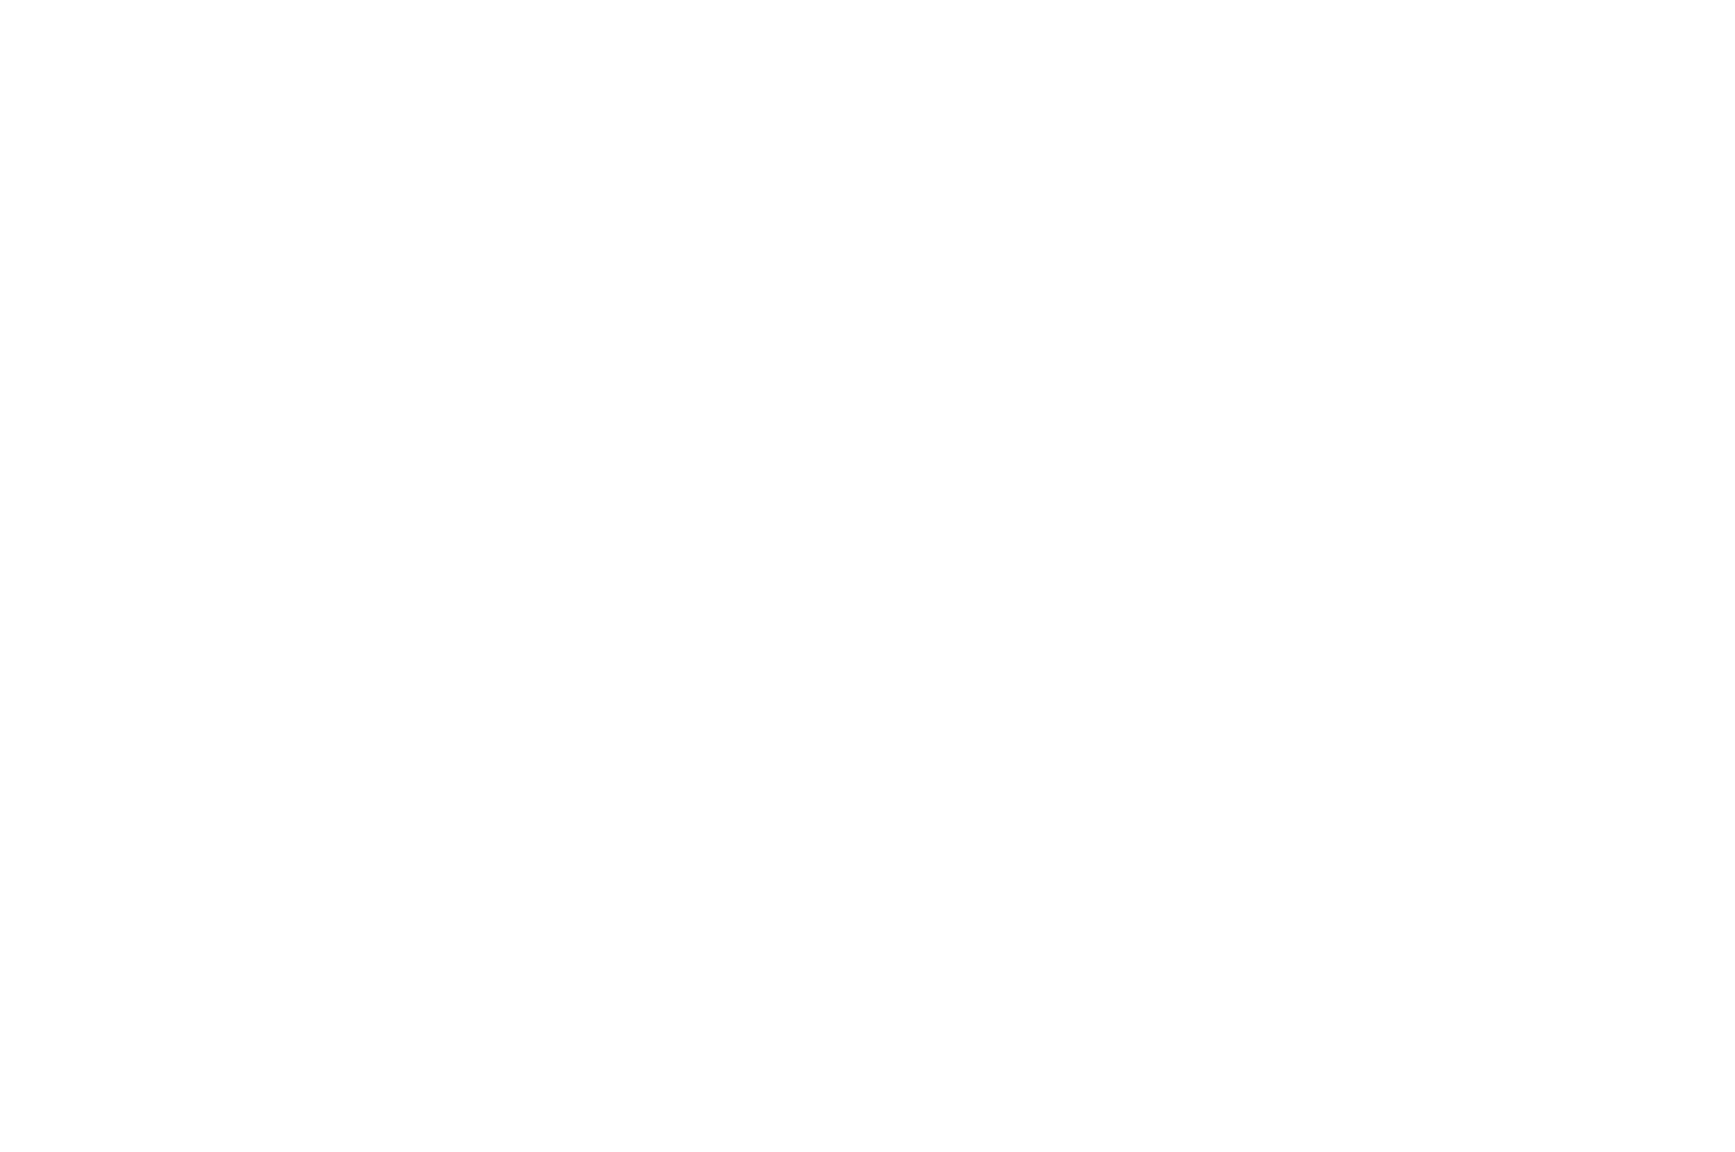 New York Short Film Festival 2022 Official Selection laurel